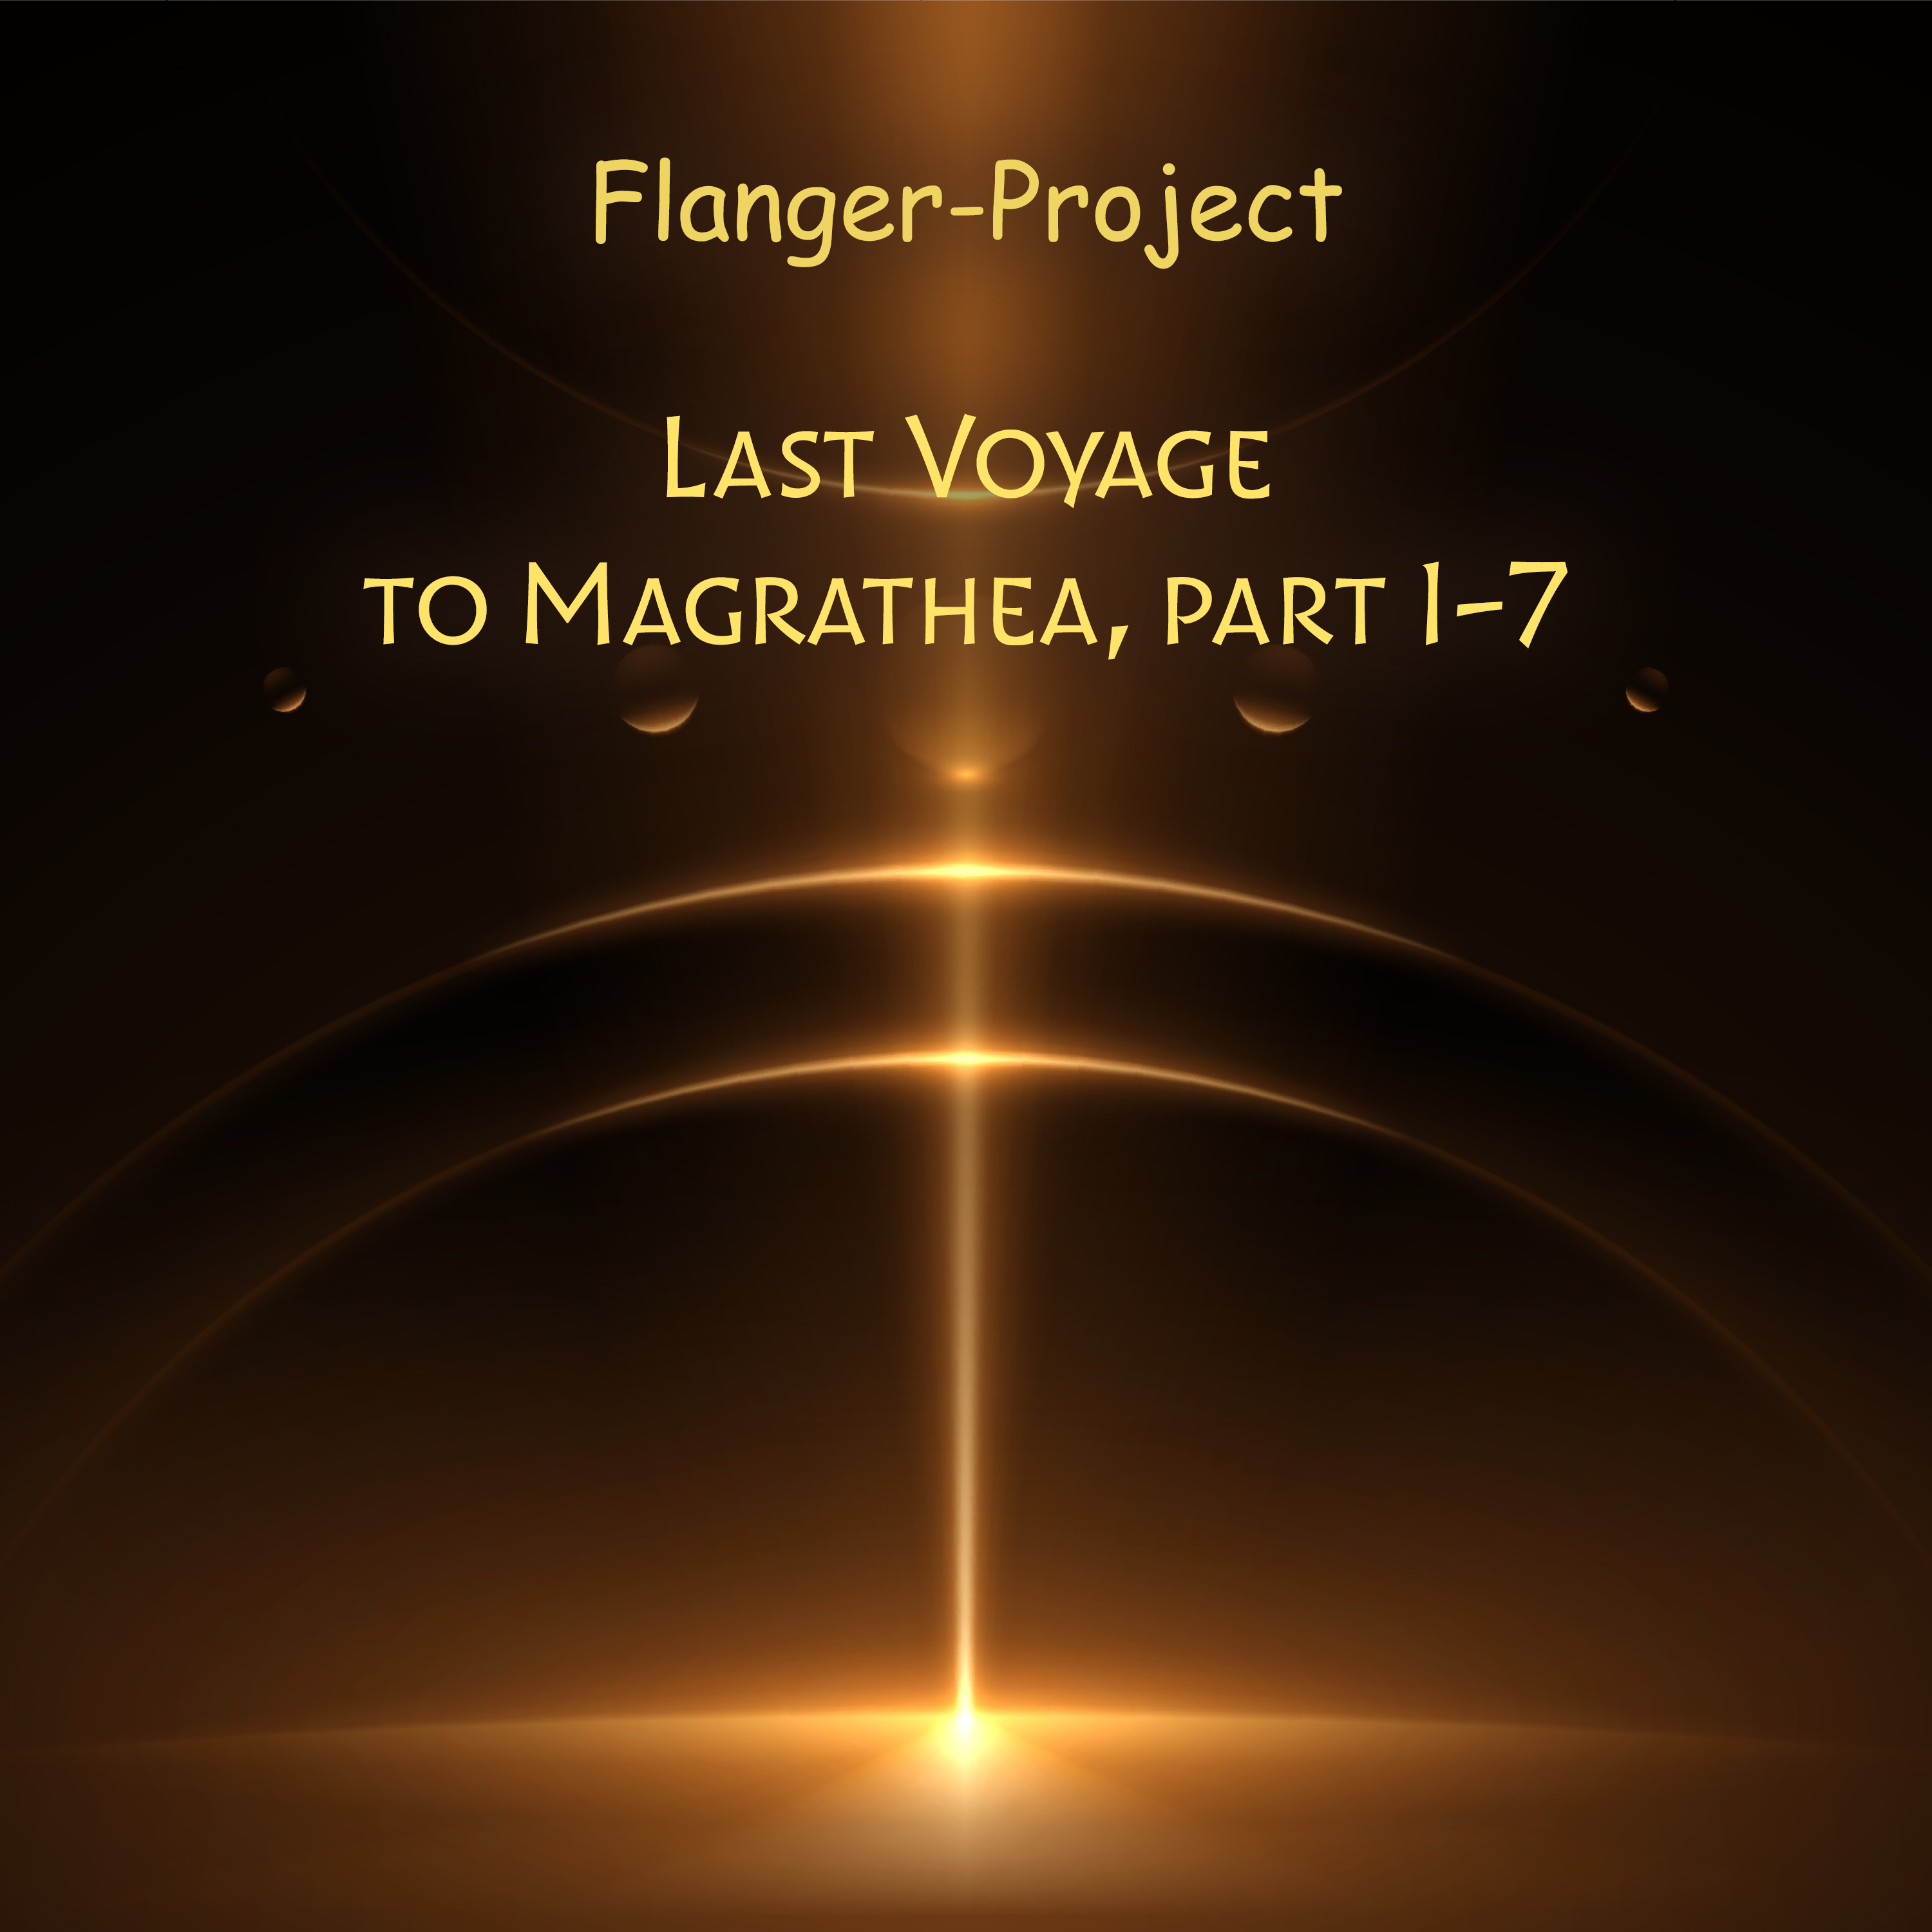 Voyage to Magrathea, Part 1-7